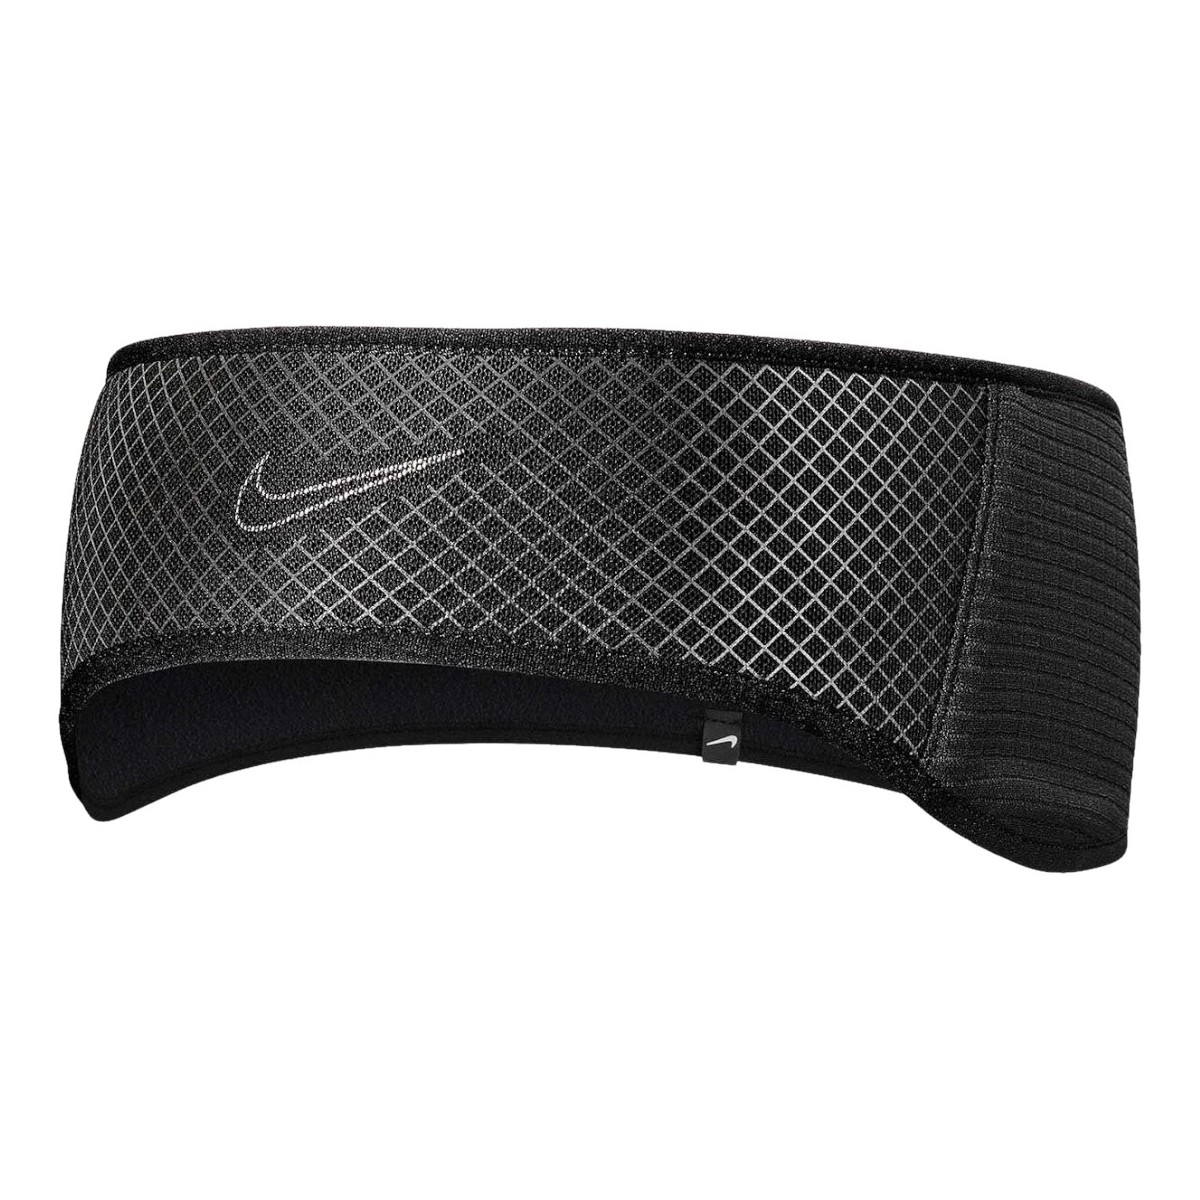 Accesorii Bărbați Accesorii sport Nike Running Men Headband Negru